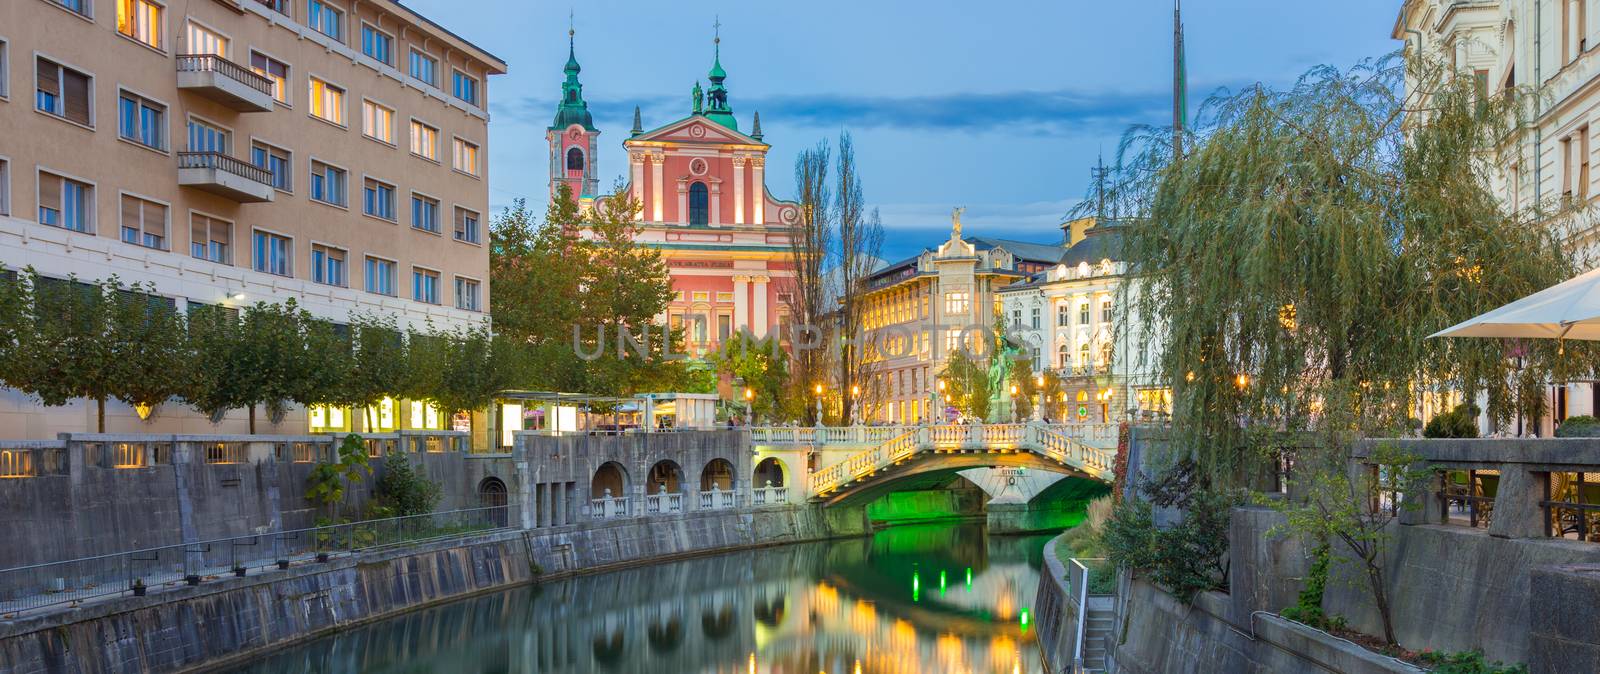 Romantic Ljubljana city center. River Ljubljanica, Triple Bridge - Tromostovje, Preseren square and Franciscan Church of the Annunciation. Ljubljana Slovenia Europe.